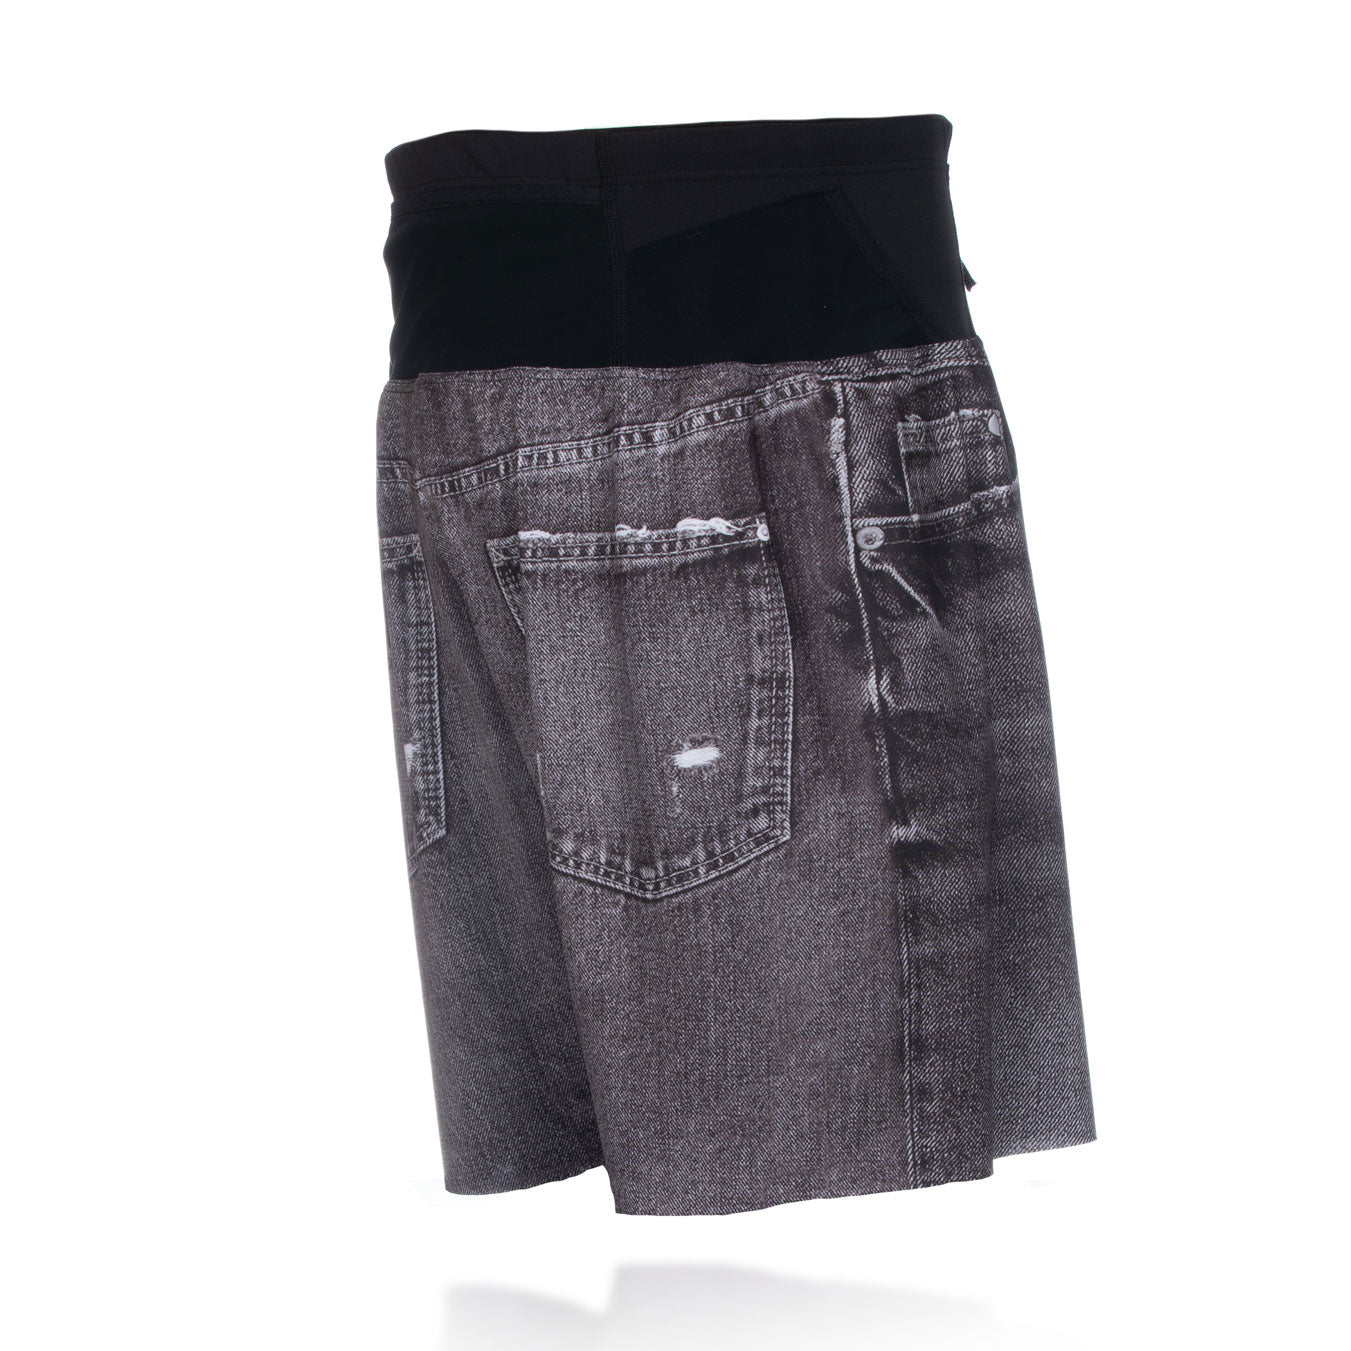 Pantalón corto - Black Jeans